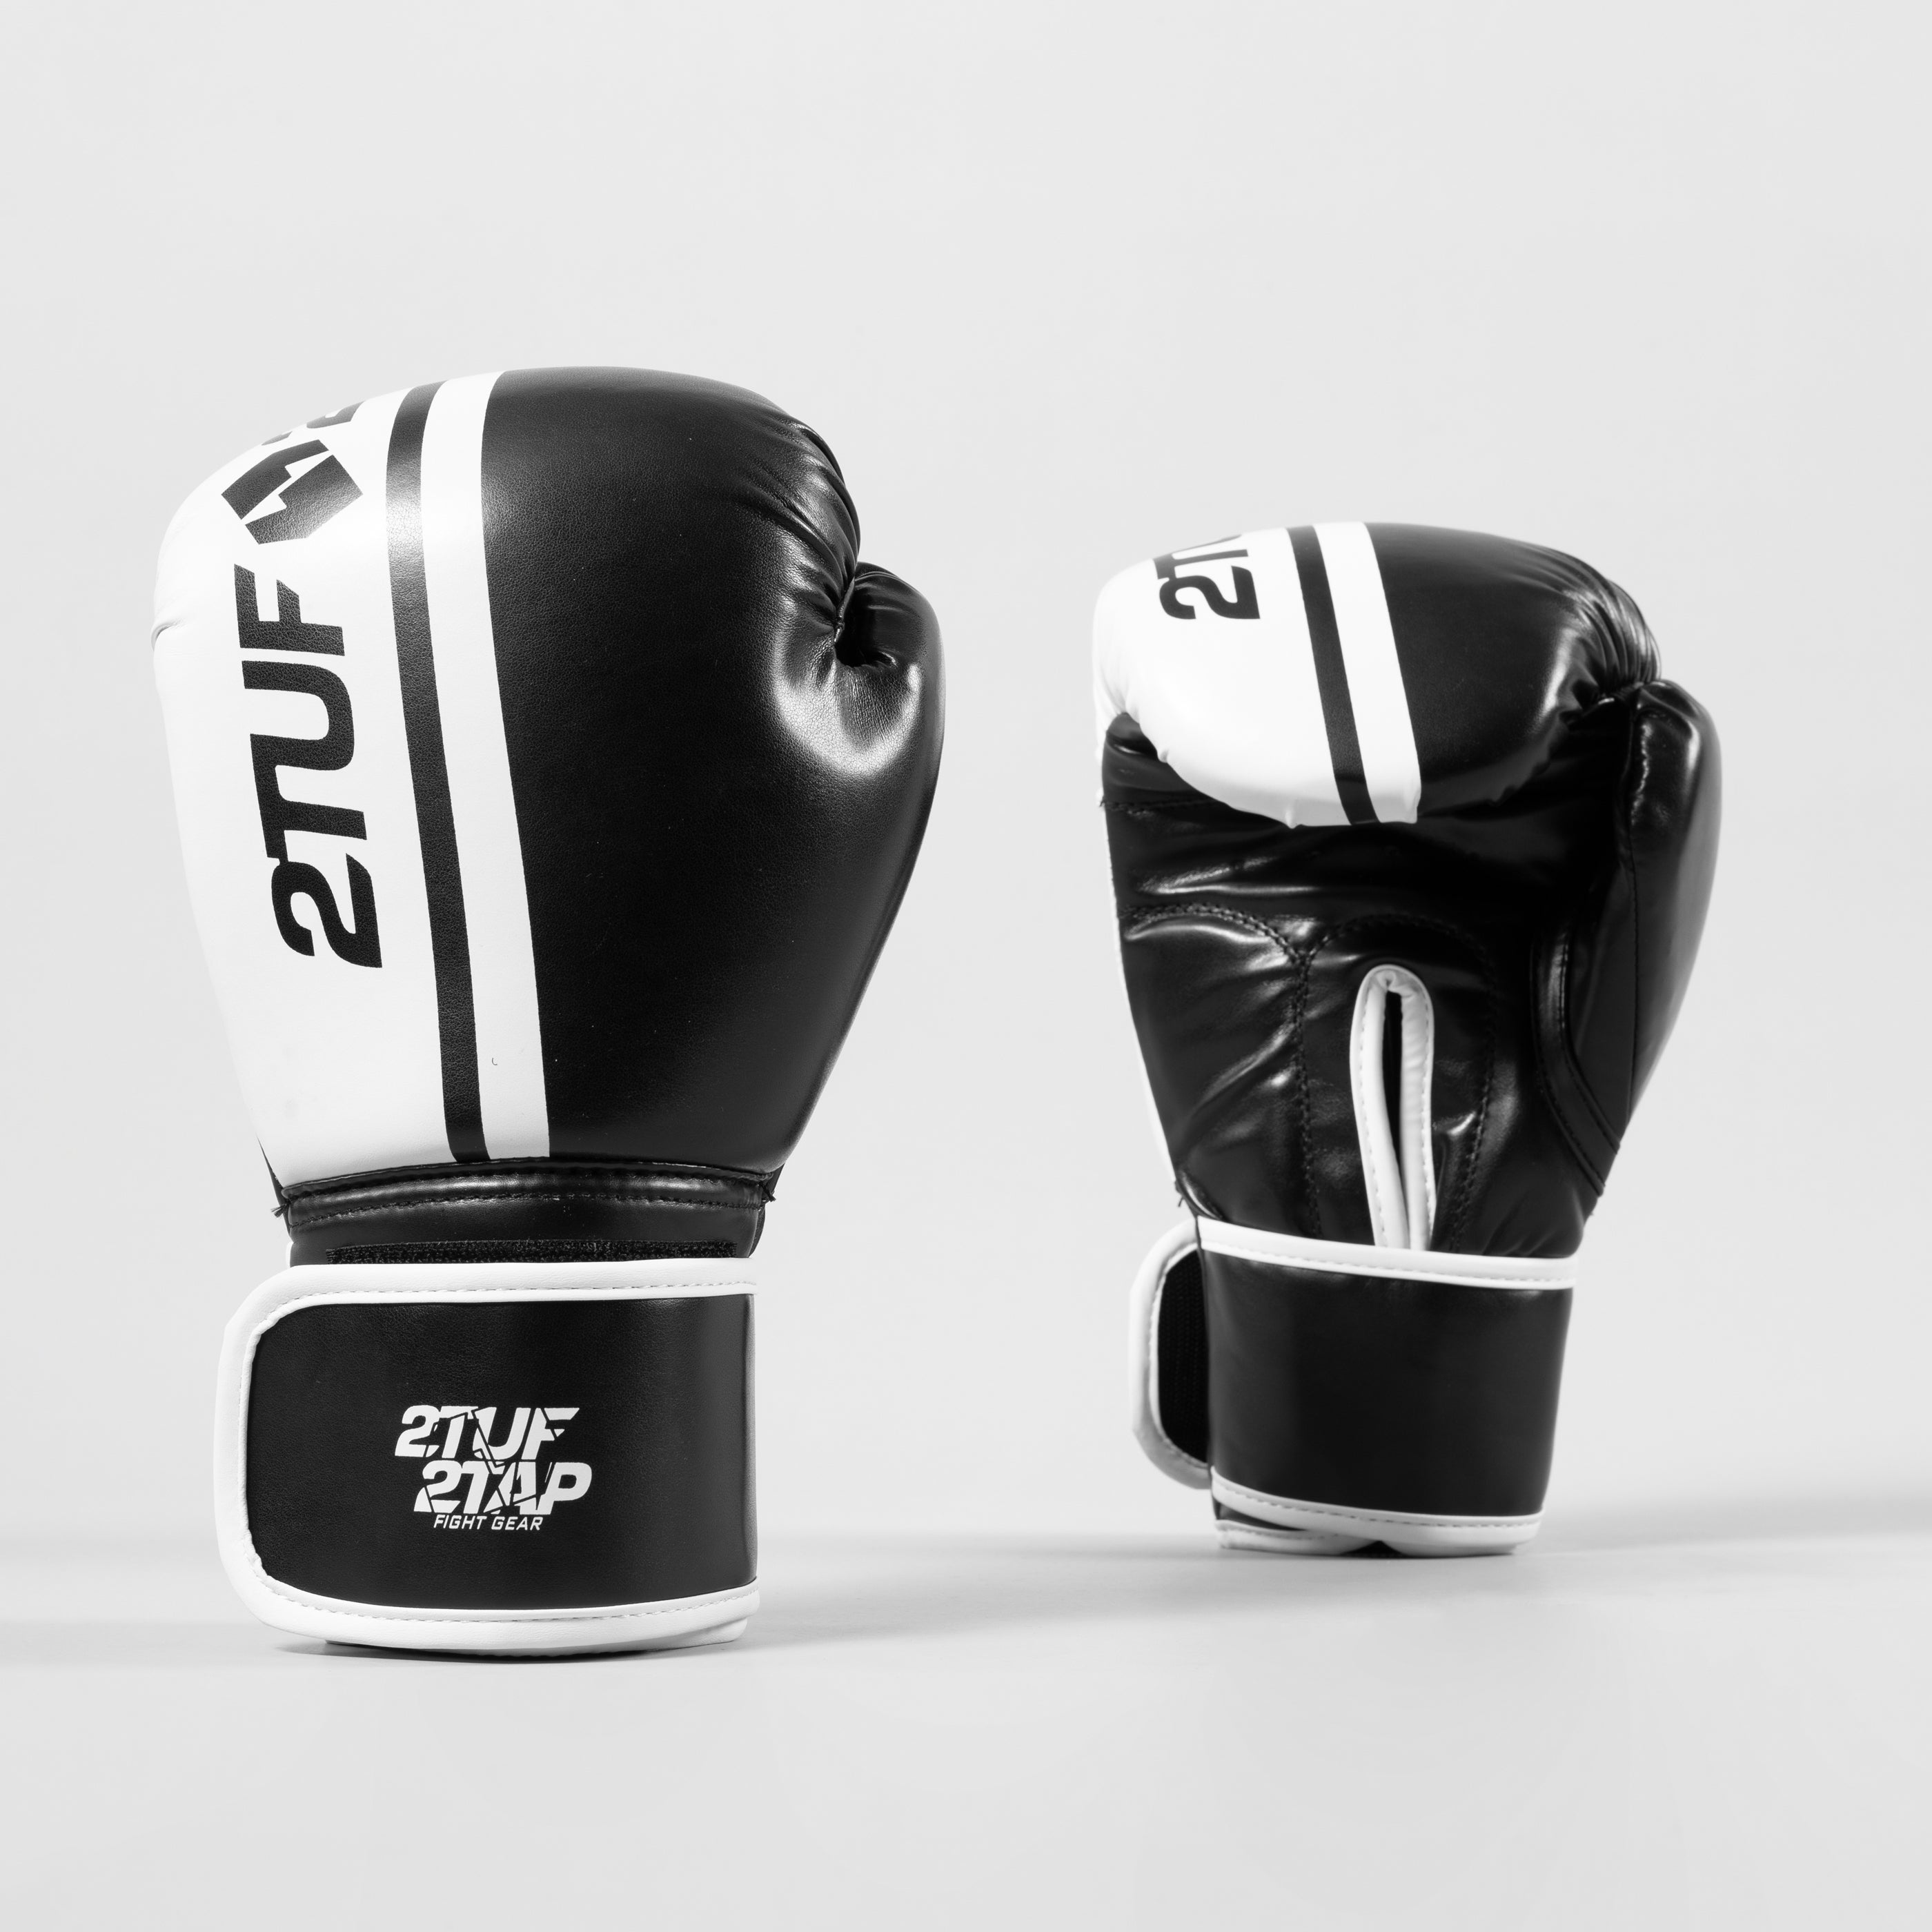 'Hit' Boxing Gloves - Black/White 2TUF2TAP